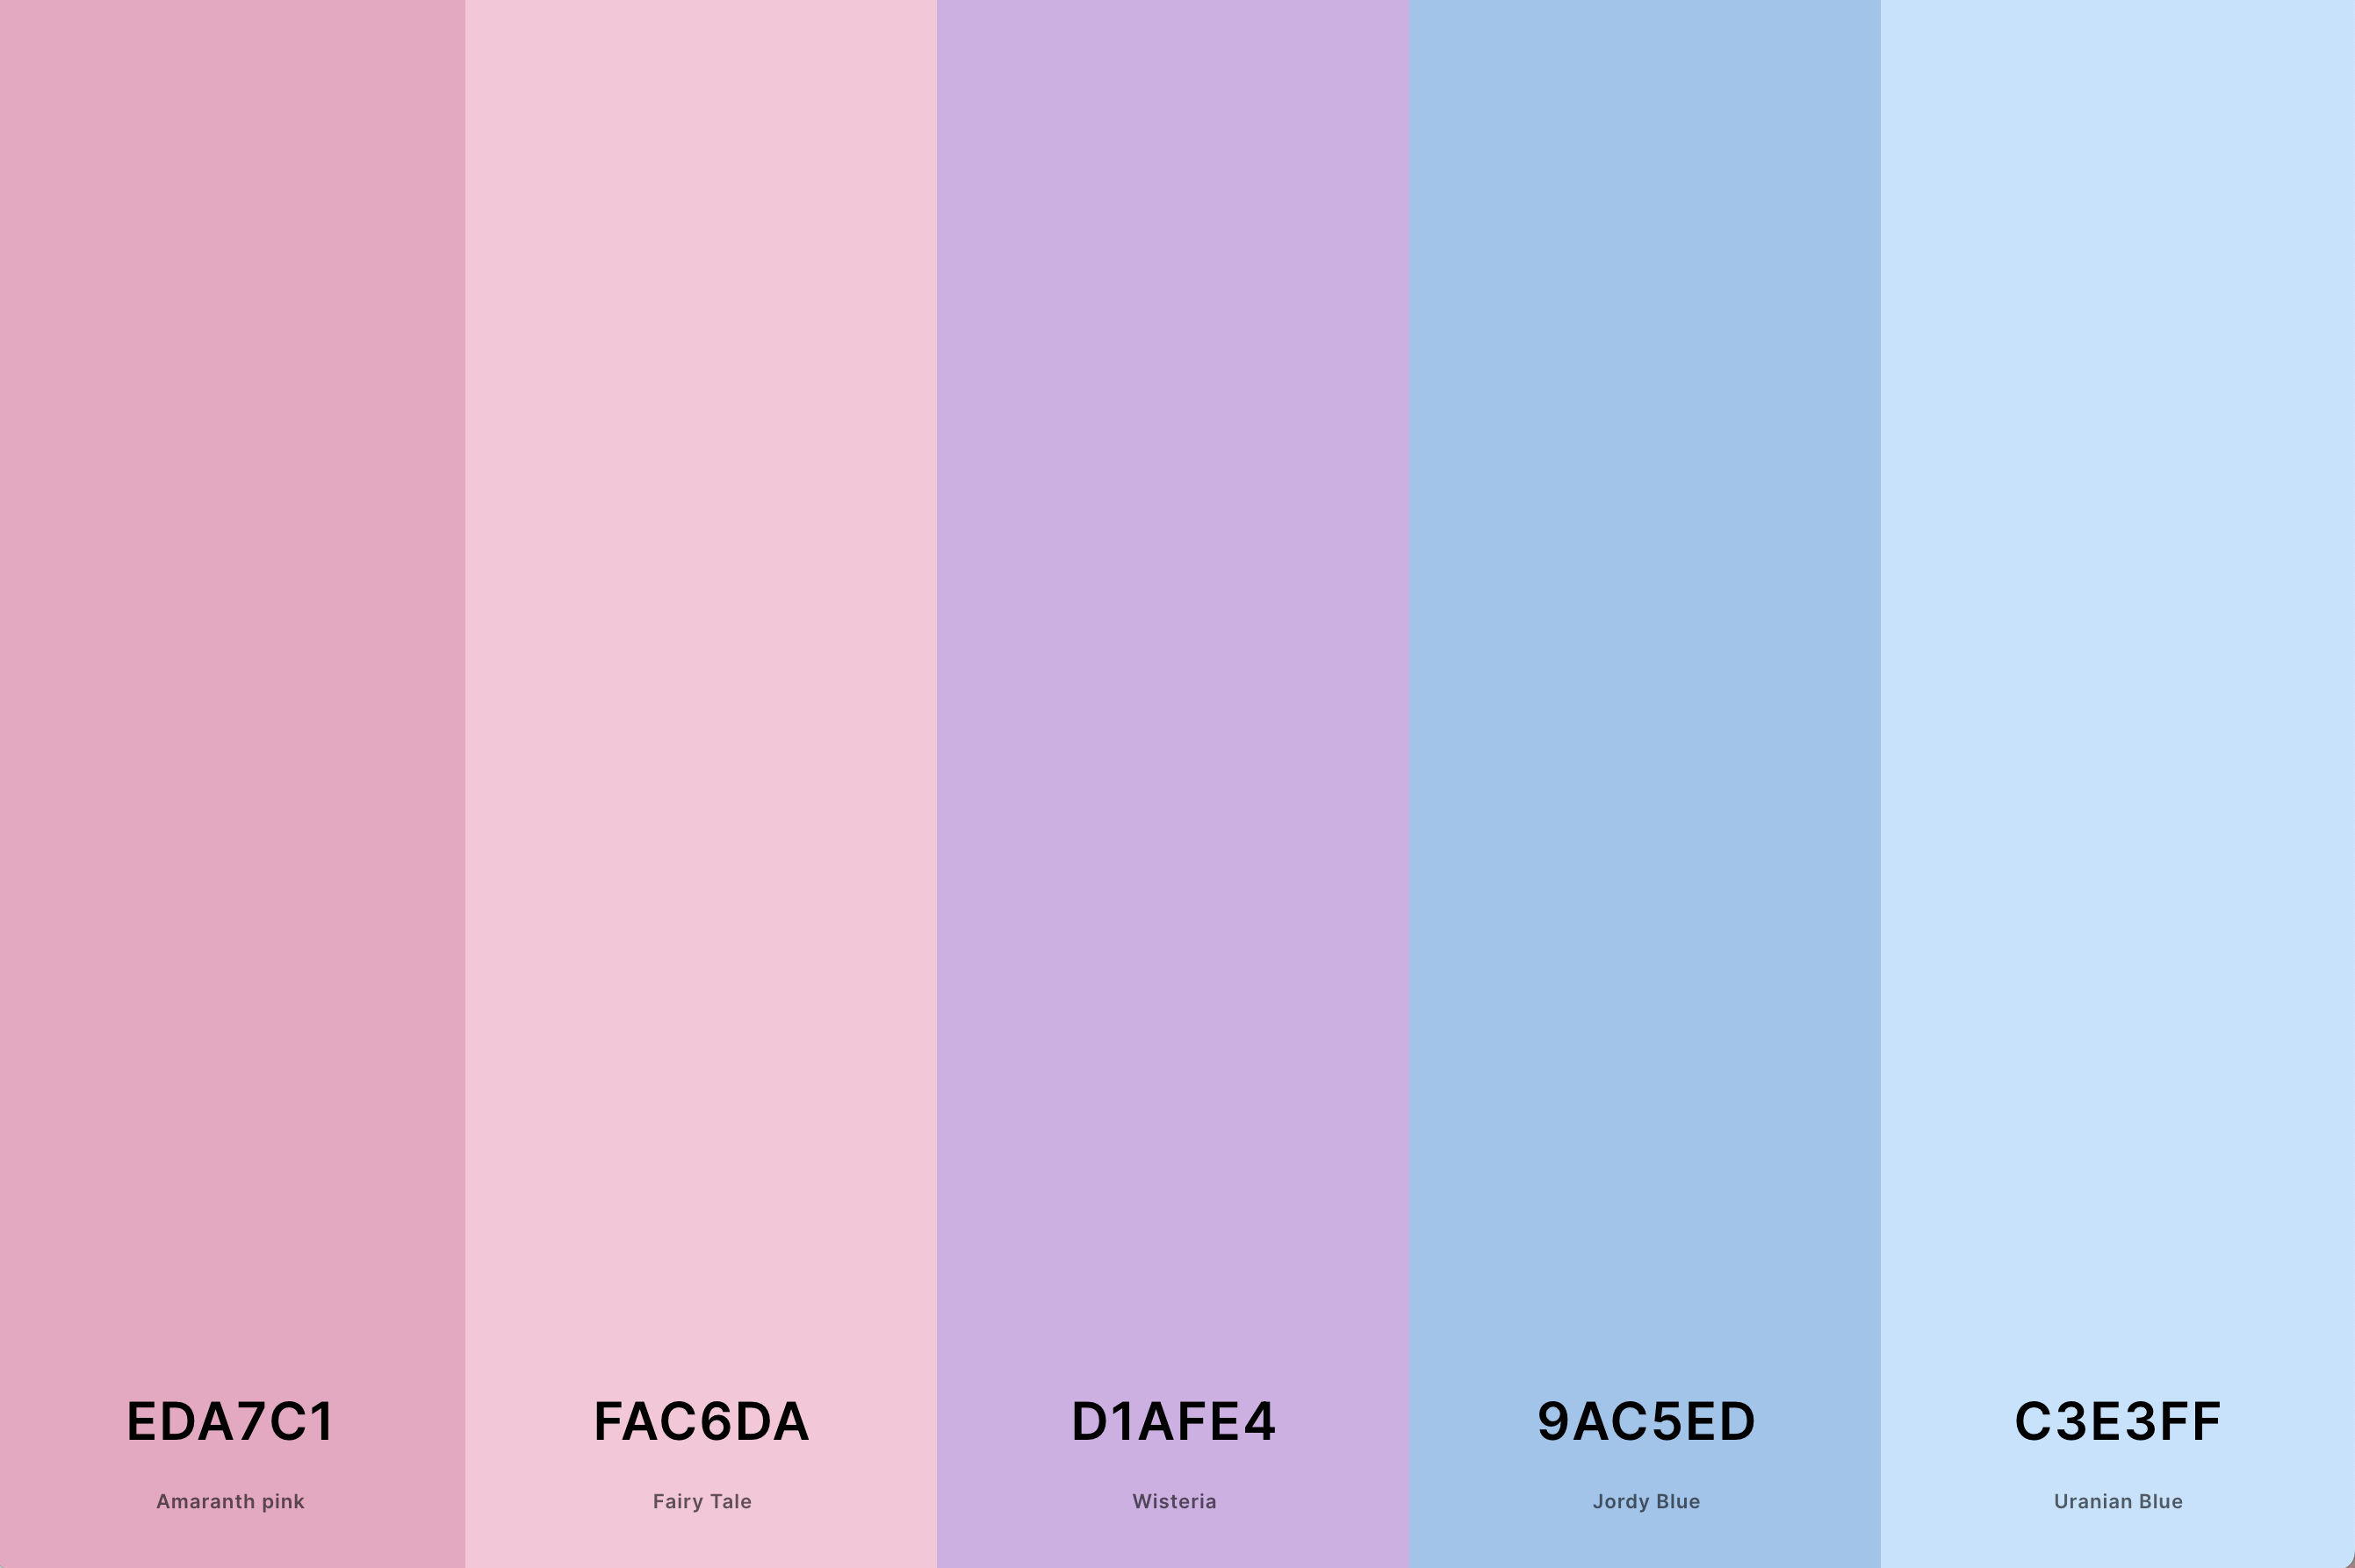 25. Pink Wedding Color Palette Color Palette with Amaranth Pink (Hex #EDA7C1) + Fairy Tale (Hex #FAC6DA) + Wisteria (Hex #D1AFE4) + Jordy Blue (Hex #9AC5ED) + Uranian Blue (Hex #C3E3FF) Color Palette with Hex Codes